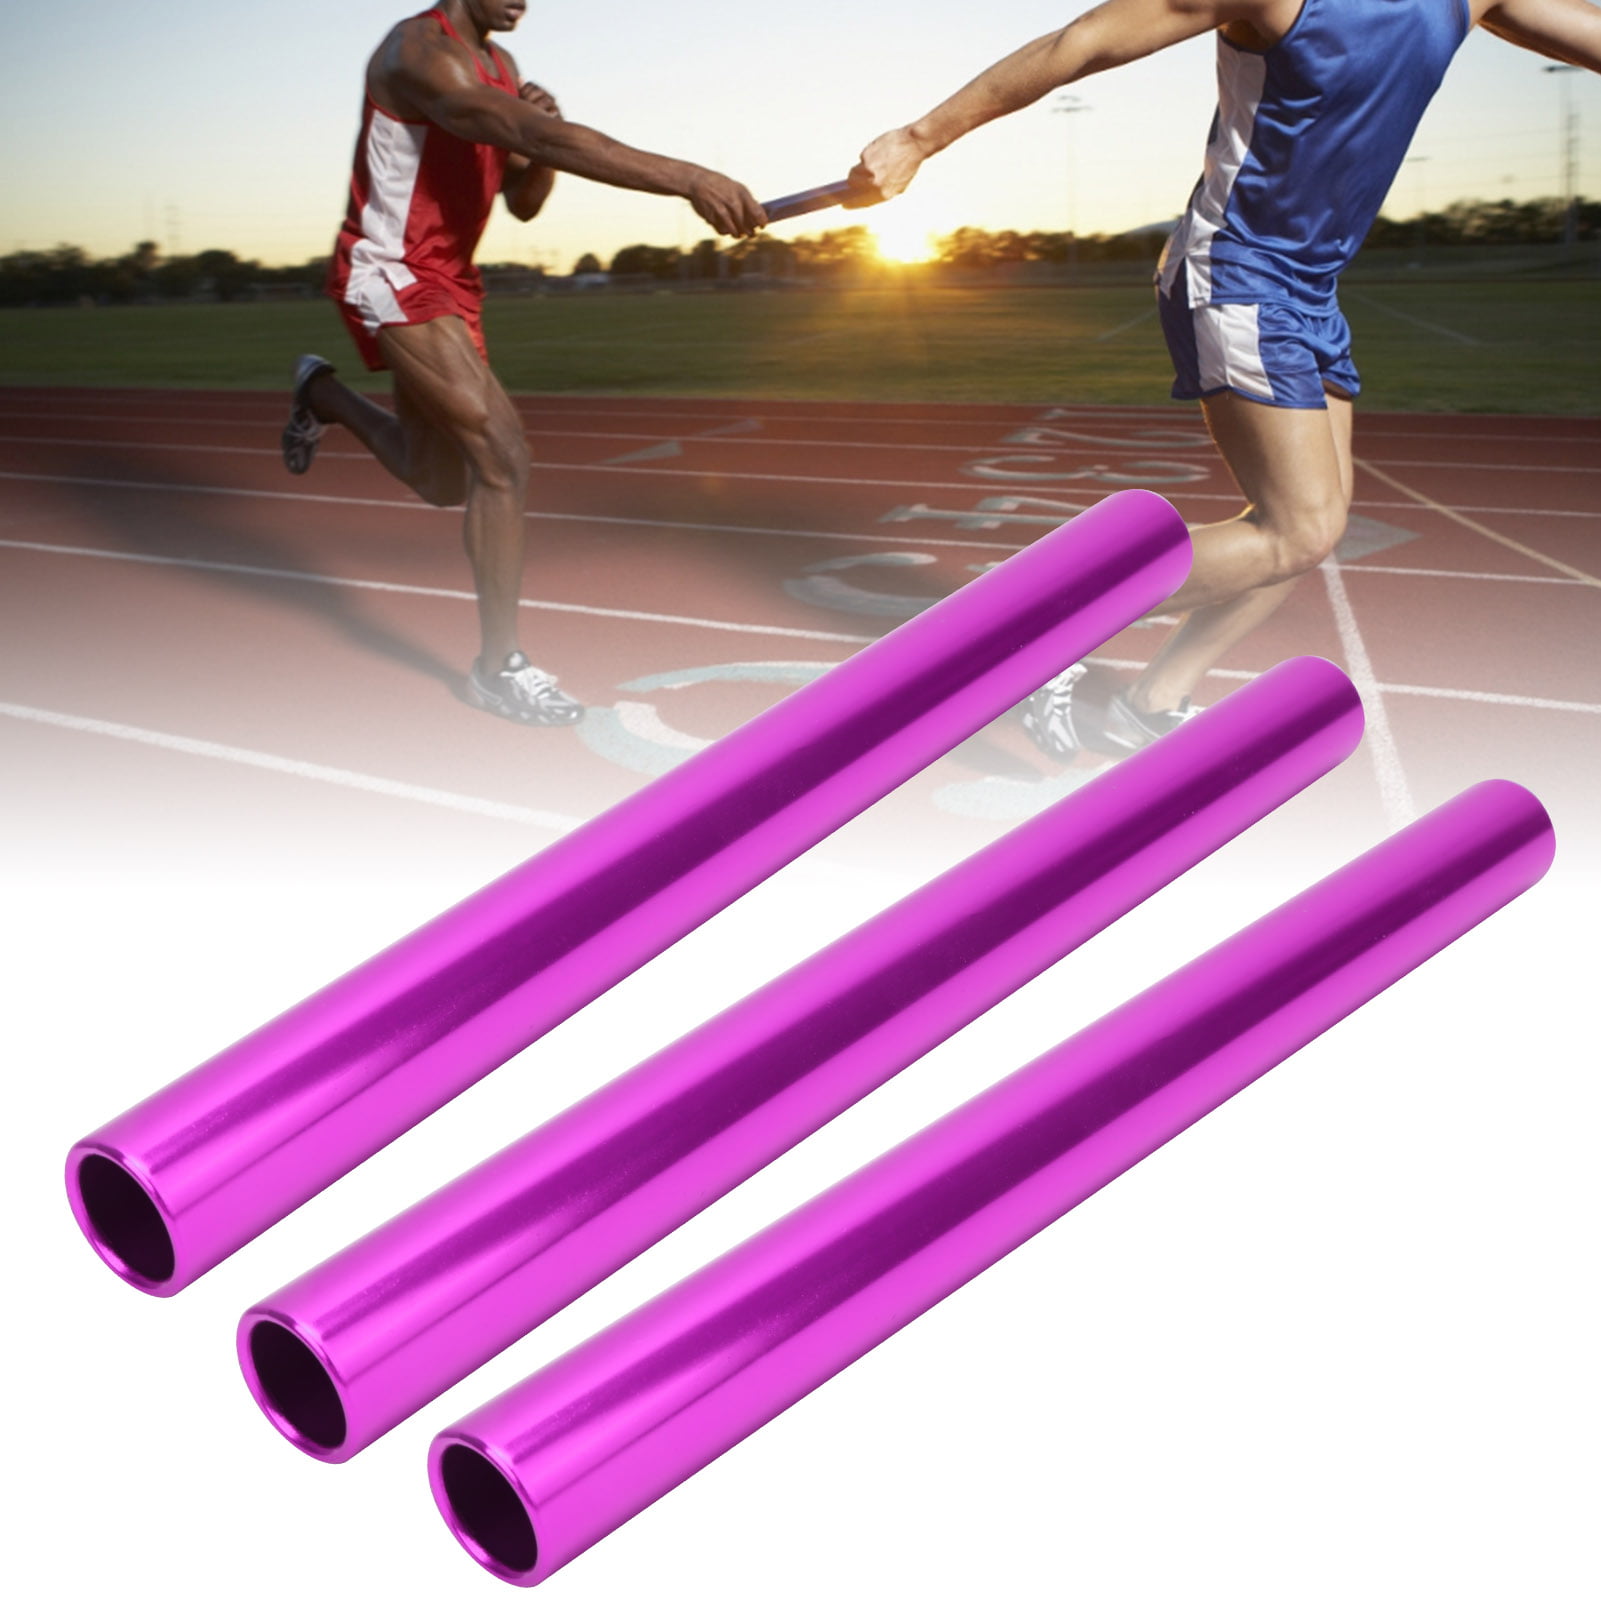 Relay Baton,3pcs Aluminum Alloy Electroplating Relay Batons Track and Field Sprint Match Batons